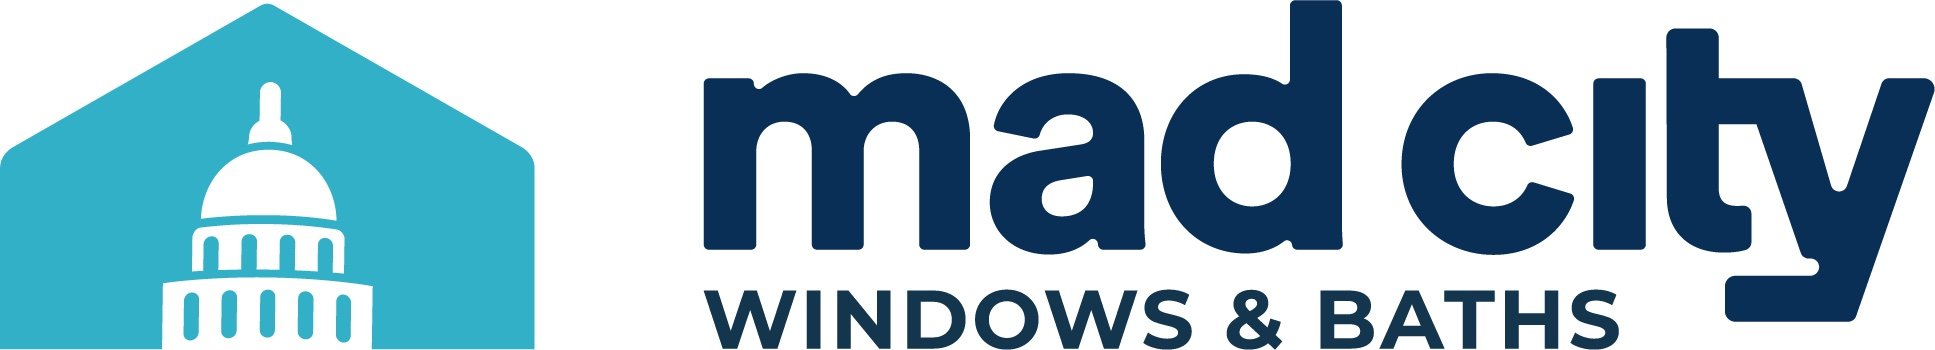 TTN-madcitywindows-02-logo-full-darkblue-horiz@1x.jpg